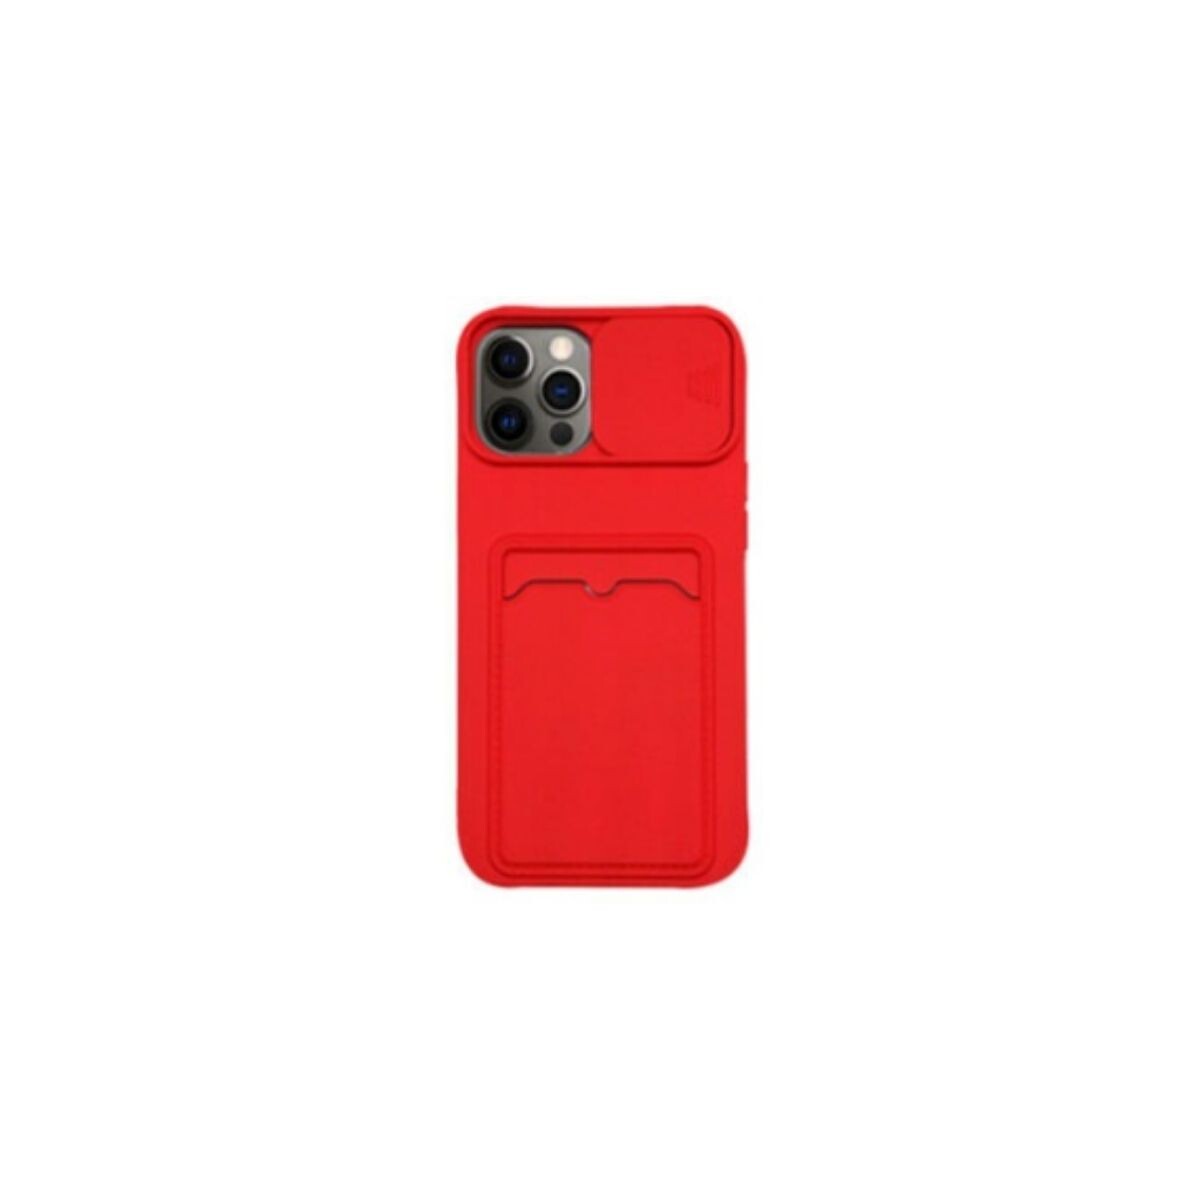 Protector cubre cámara para Samsung A02 rojo 